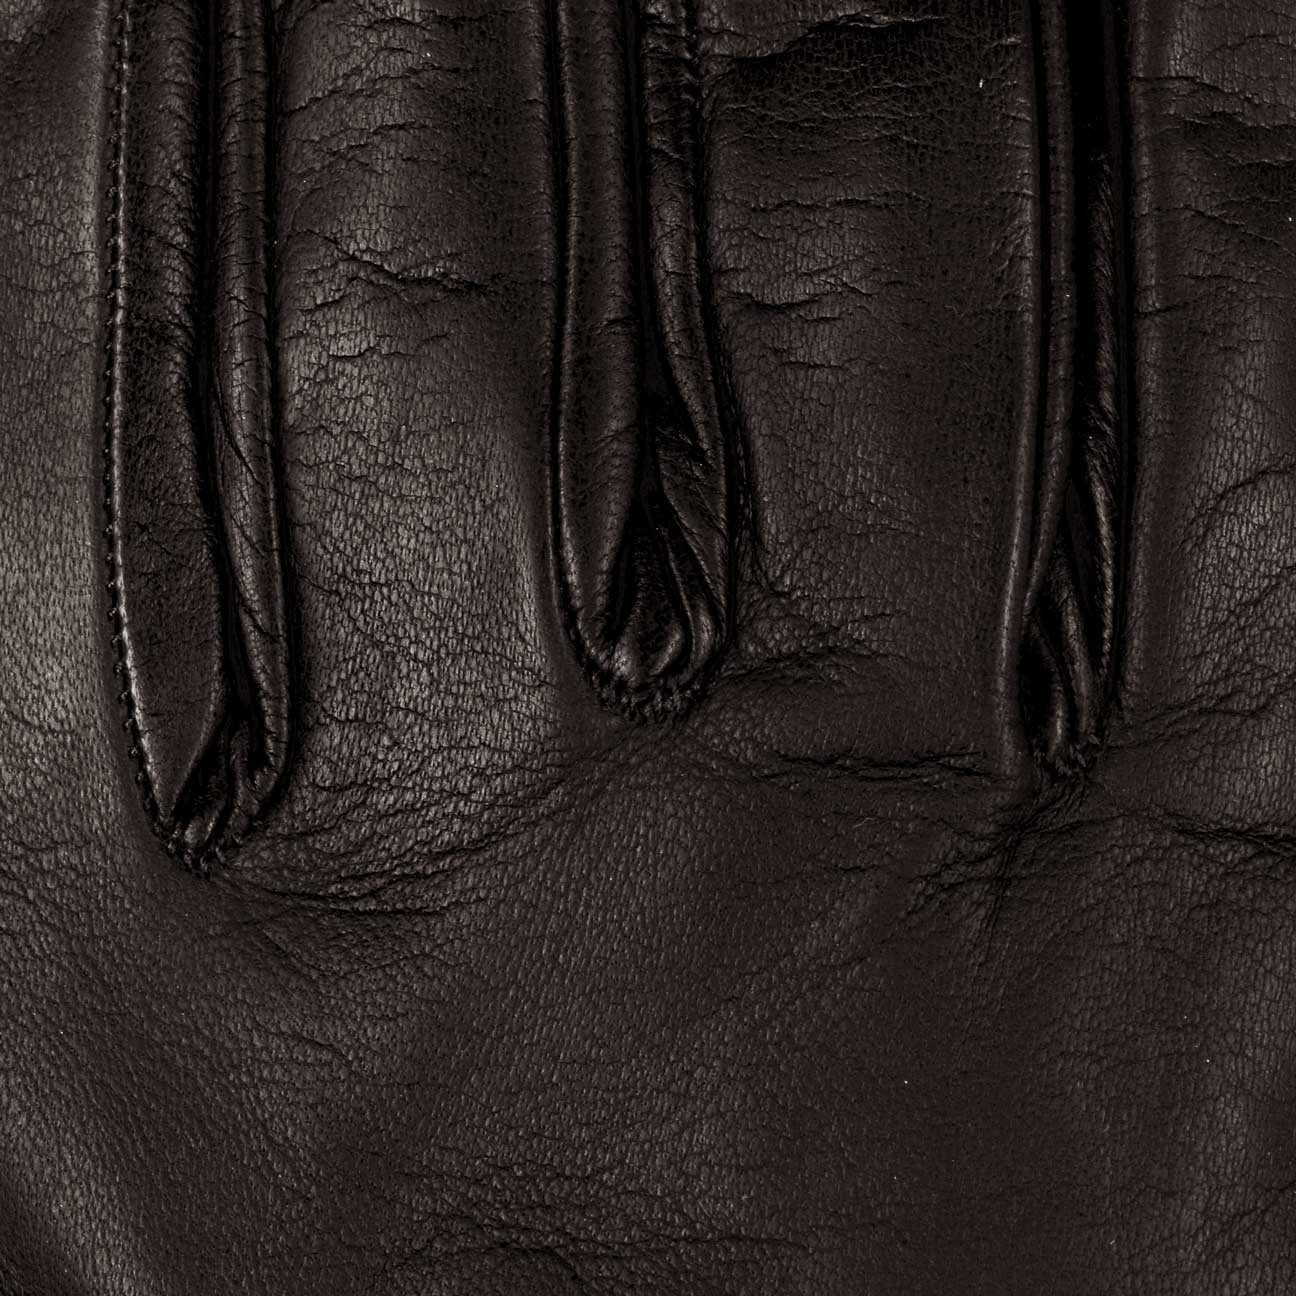 Caridei Lederhandschuhe Fingerhandschuhe mit schwarz Futter, Italy in Made